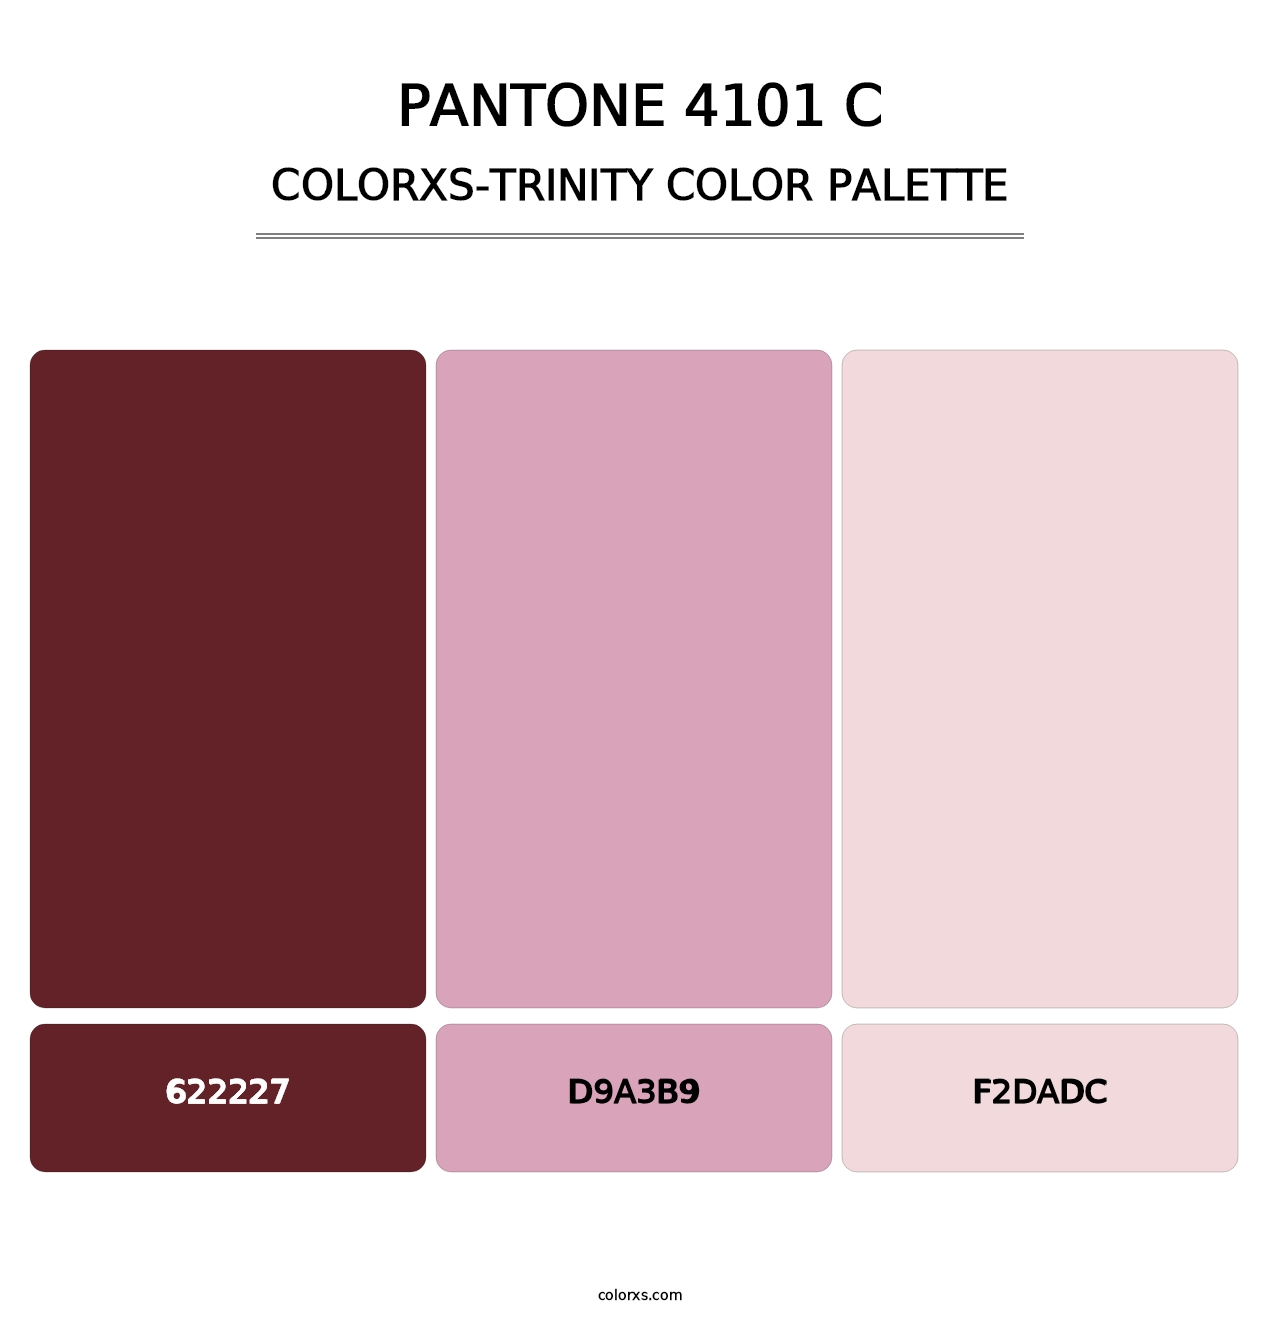 PANTONE 4101 C - Colorxs Trinity Palette